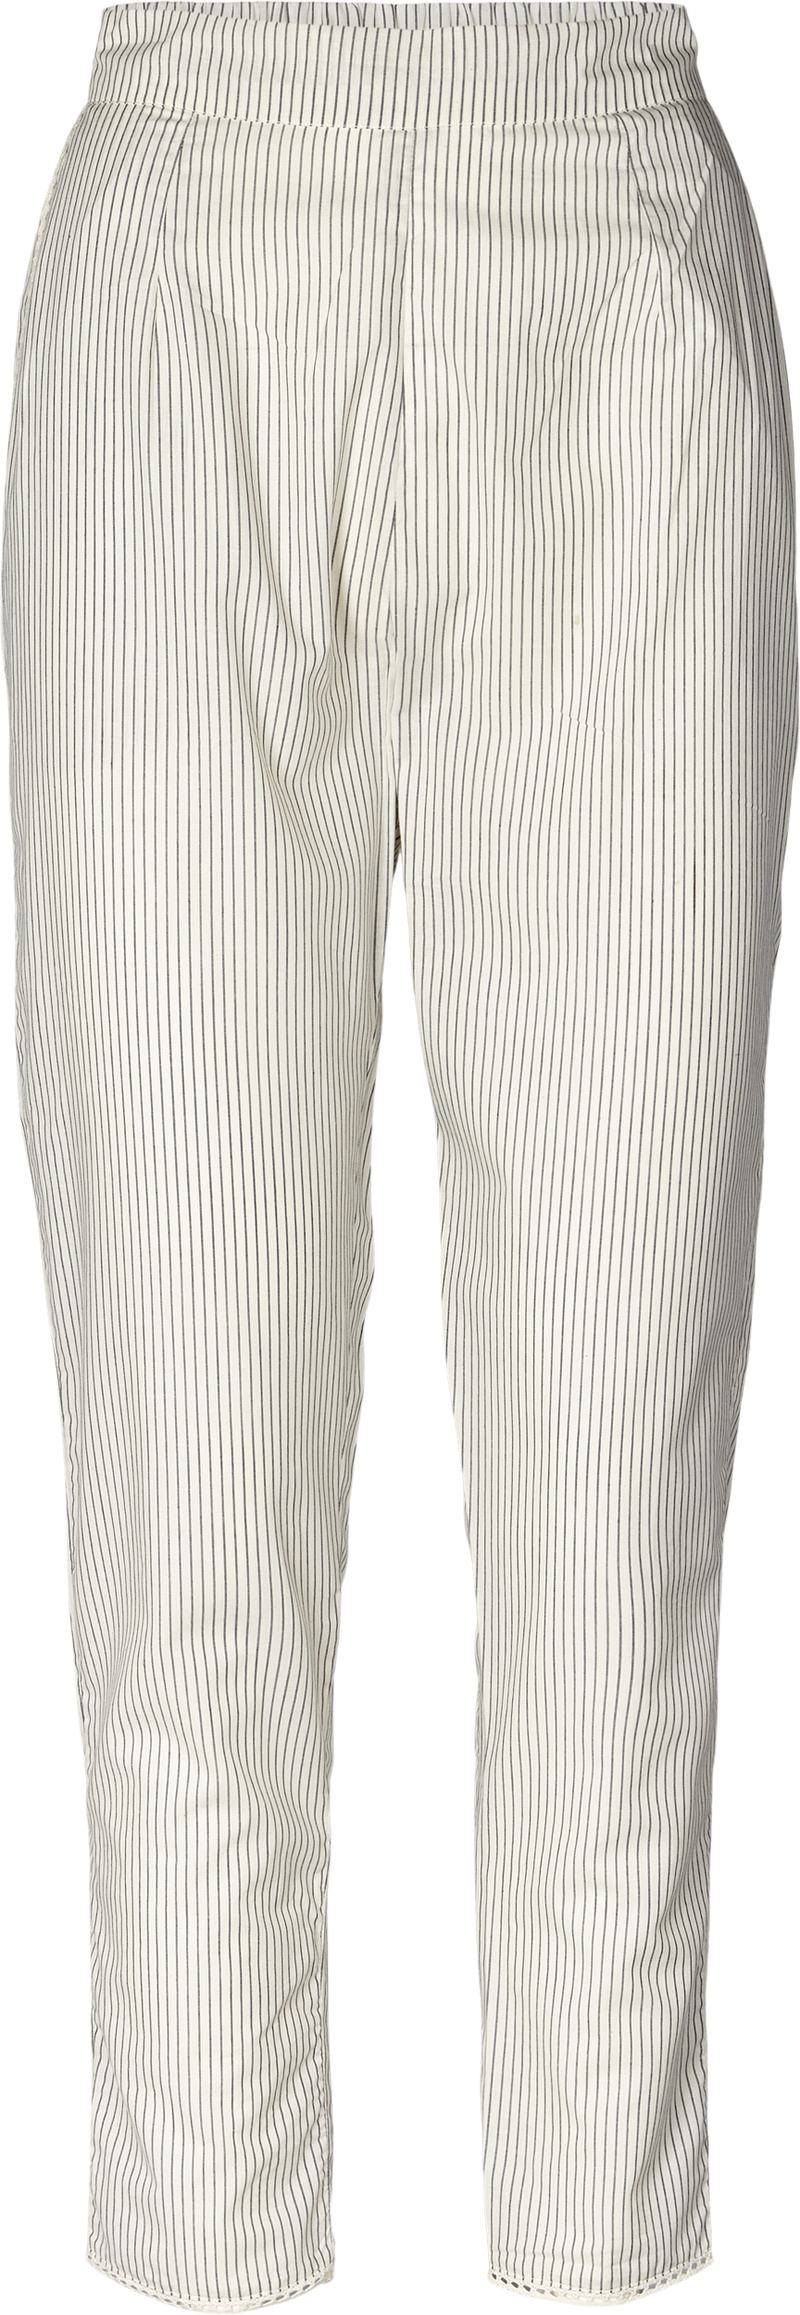 GAI+LISVA Margit Pant Cotton Stripe Pants & Shorts 470 Denim Blue Stripe